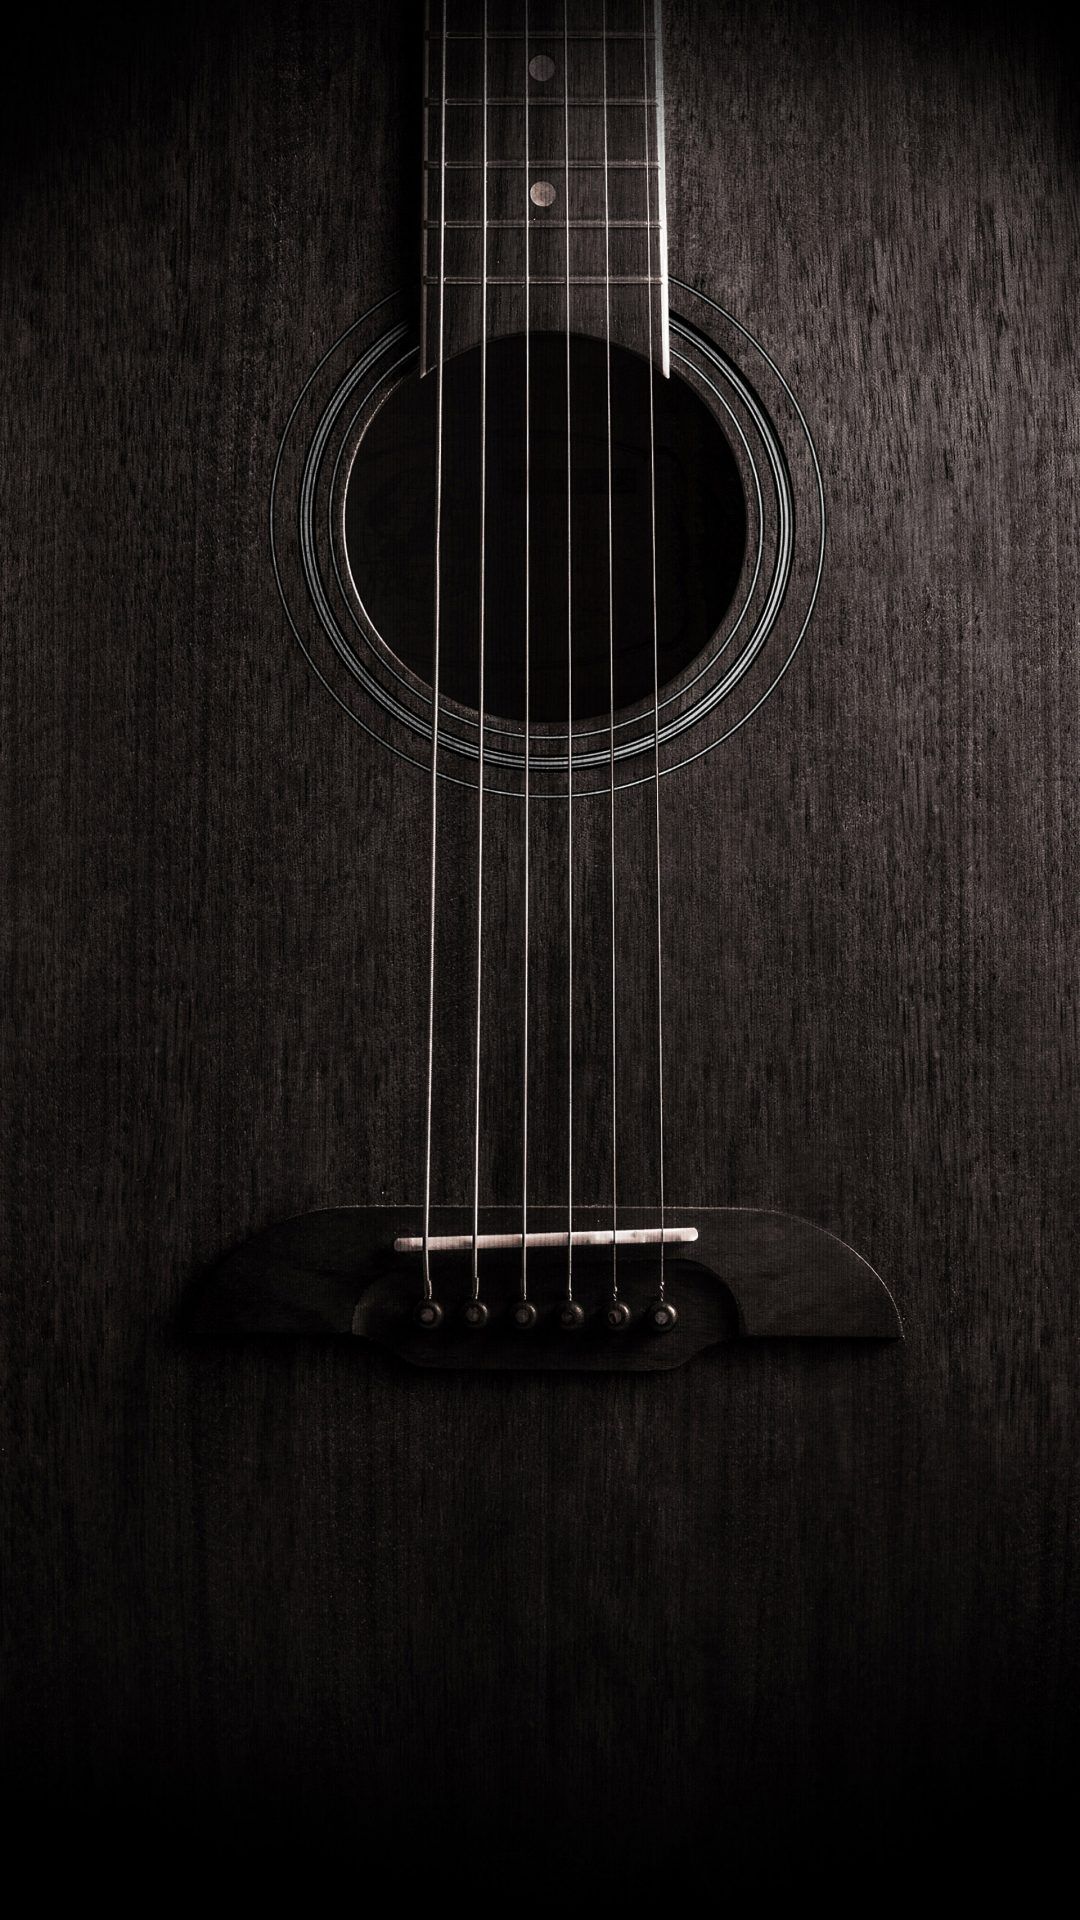 4k Music Mobile Wallpaper. iPhone wallpaper music, Microsoft wallpaper, Acoustic guitar photography